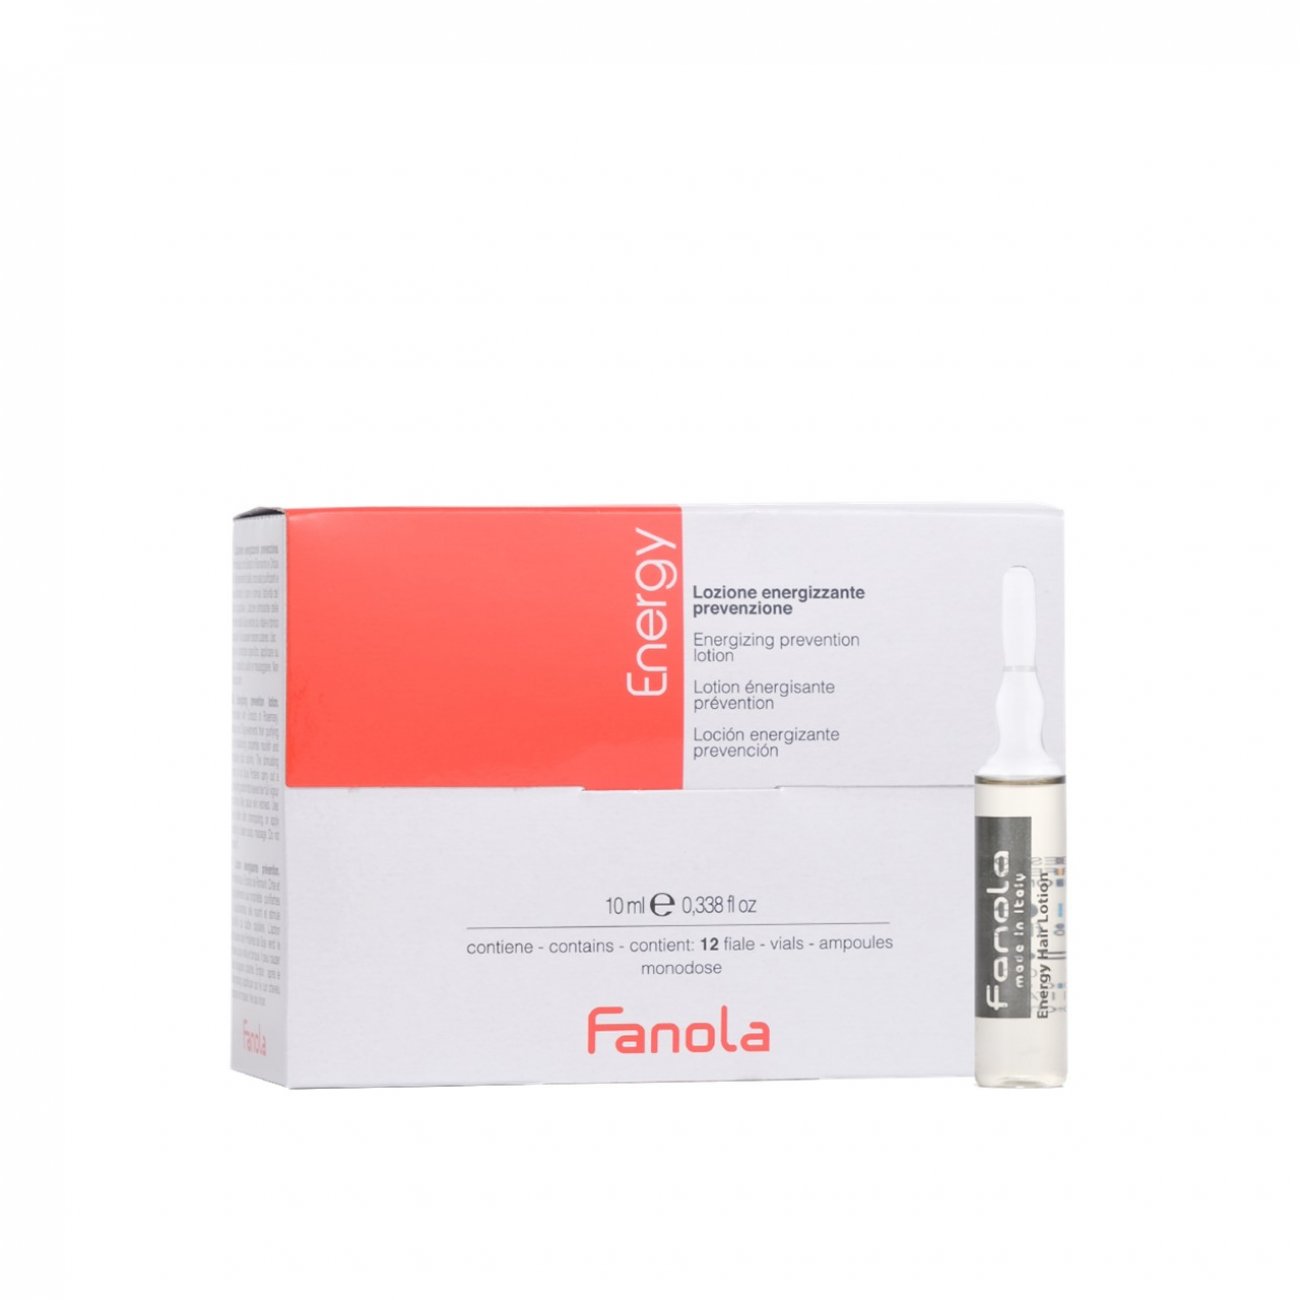 Buy Fanola Energy Prevention Anti Hair Loss Lotion 10ml (12x0.338 fl oz) · USA